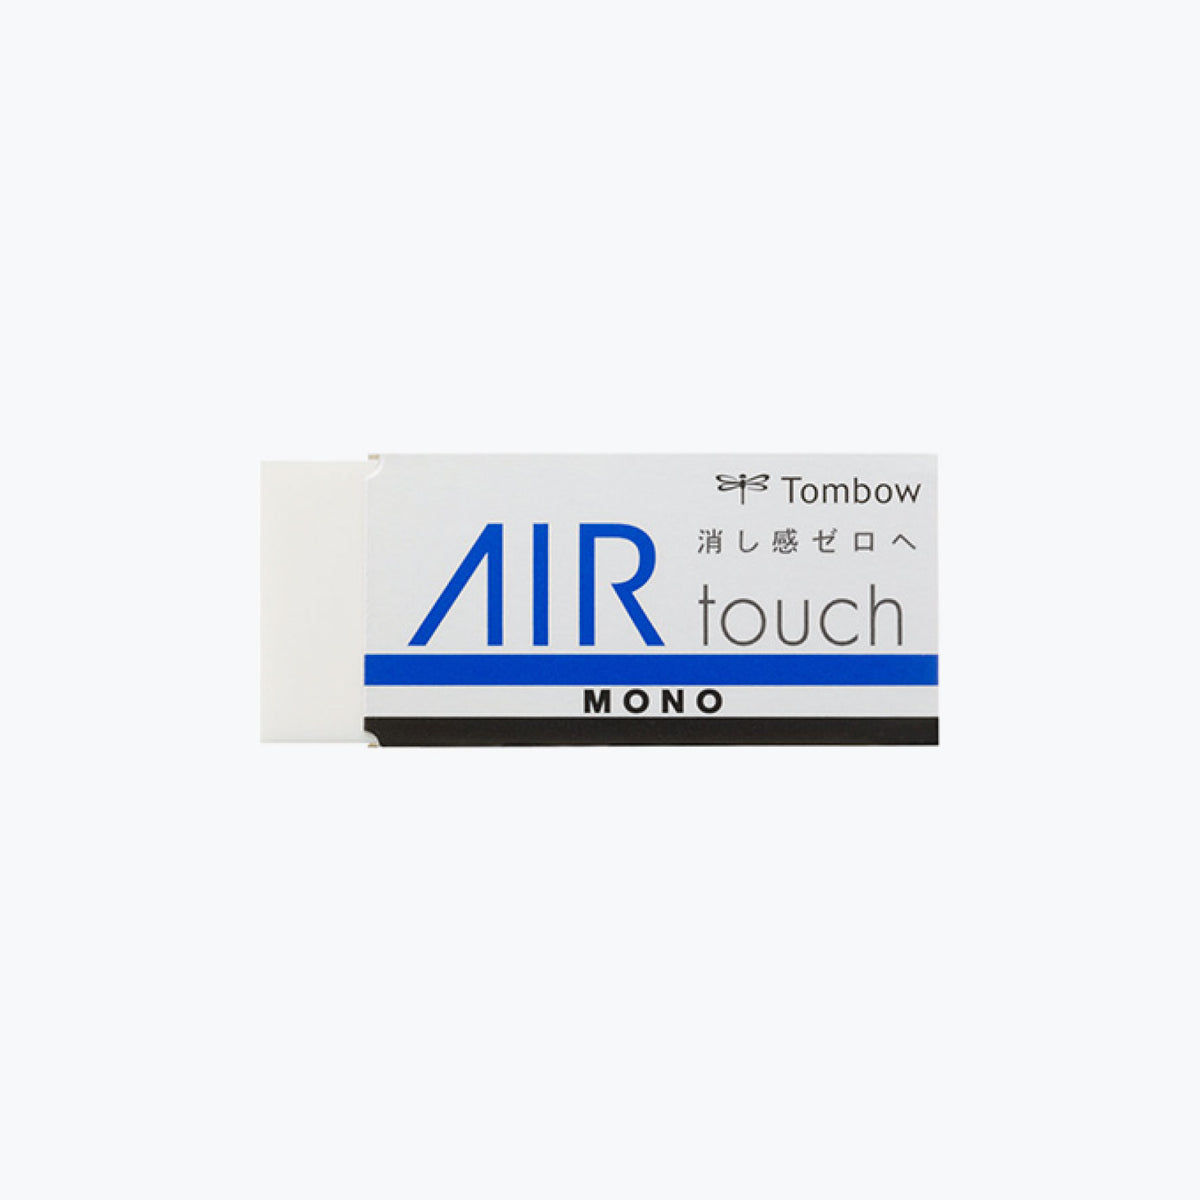 Tombow - Eraser - Mono - Air Touch